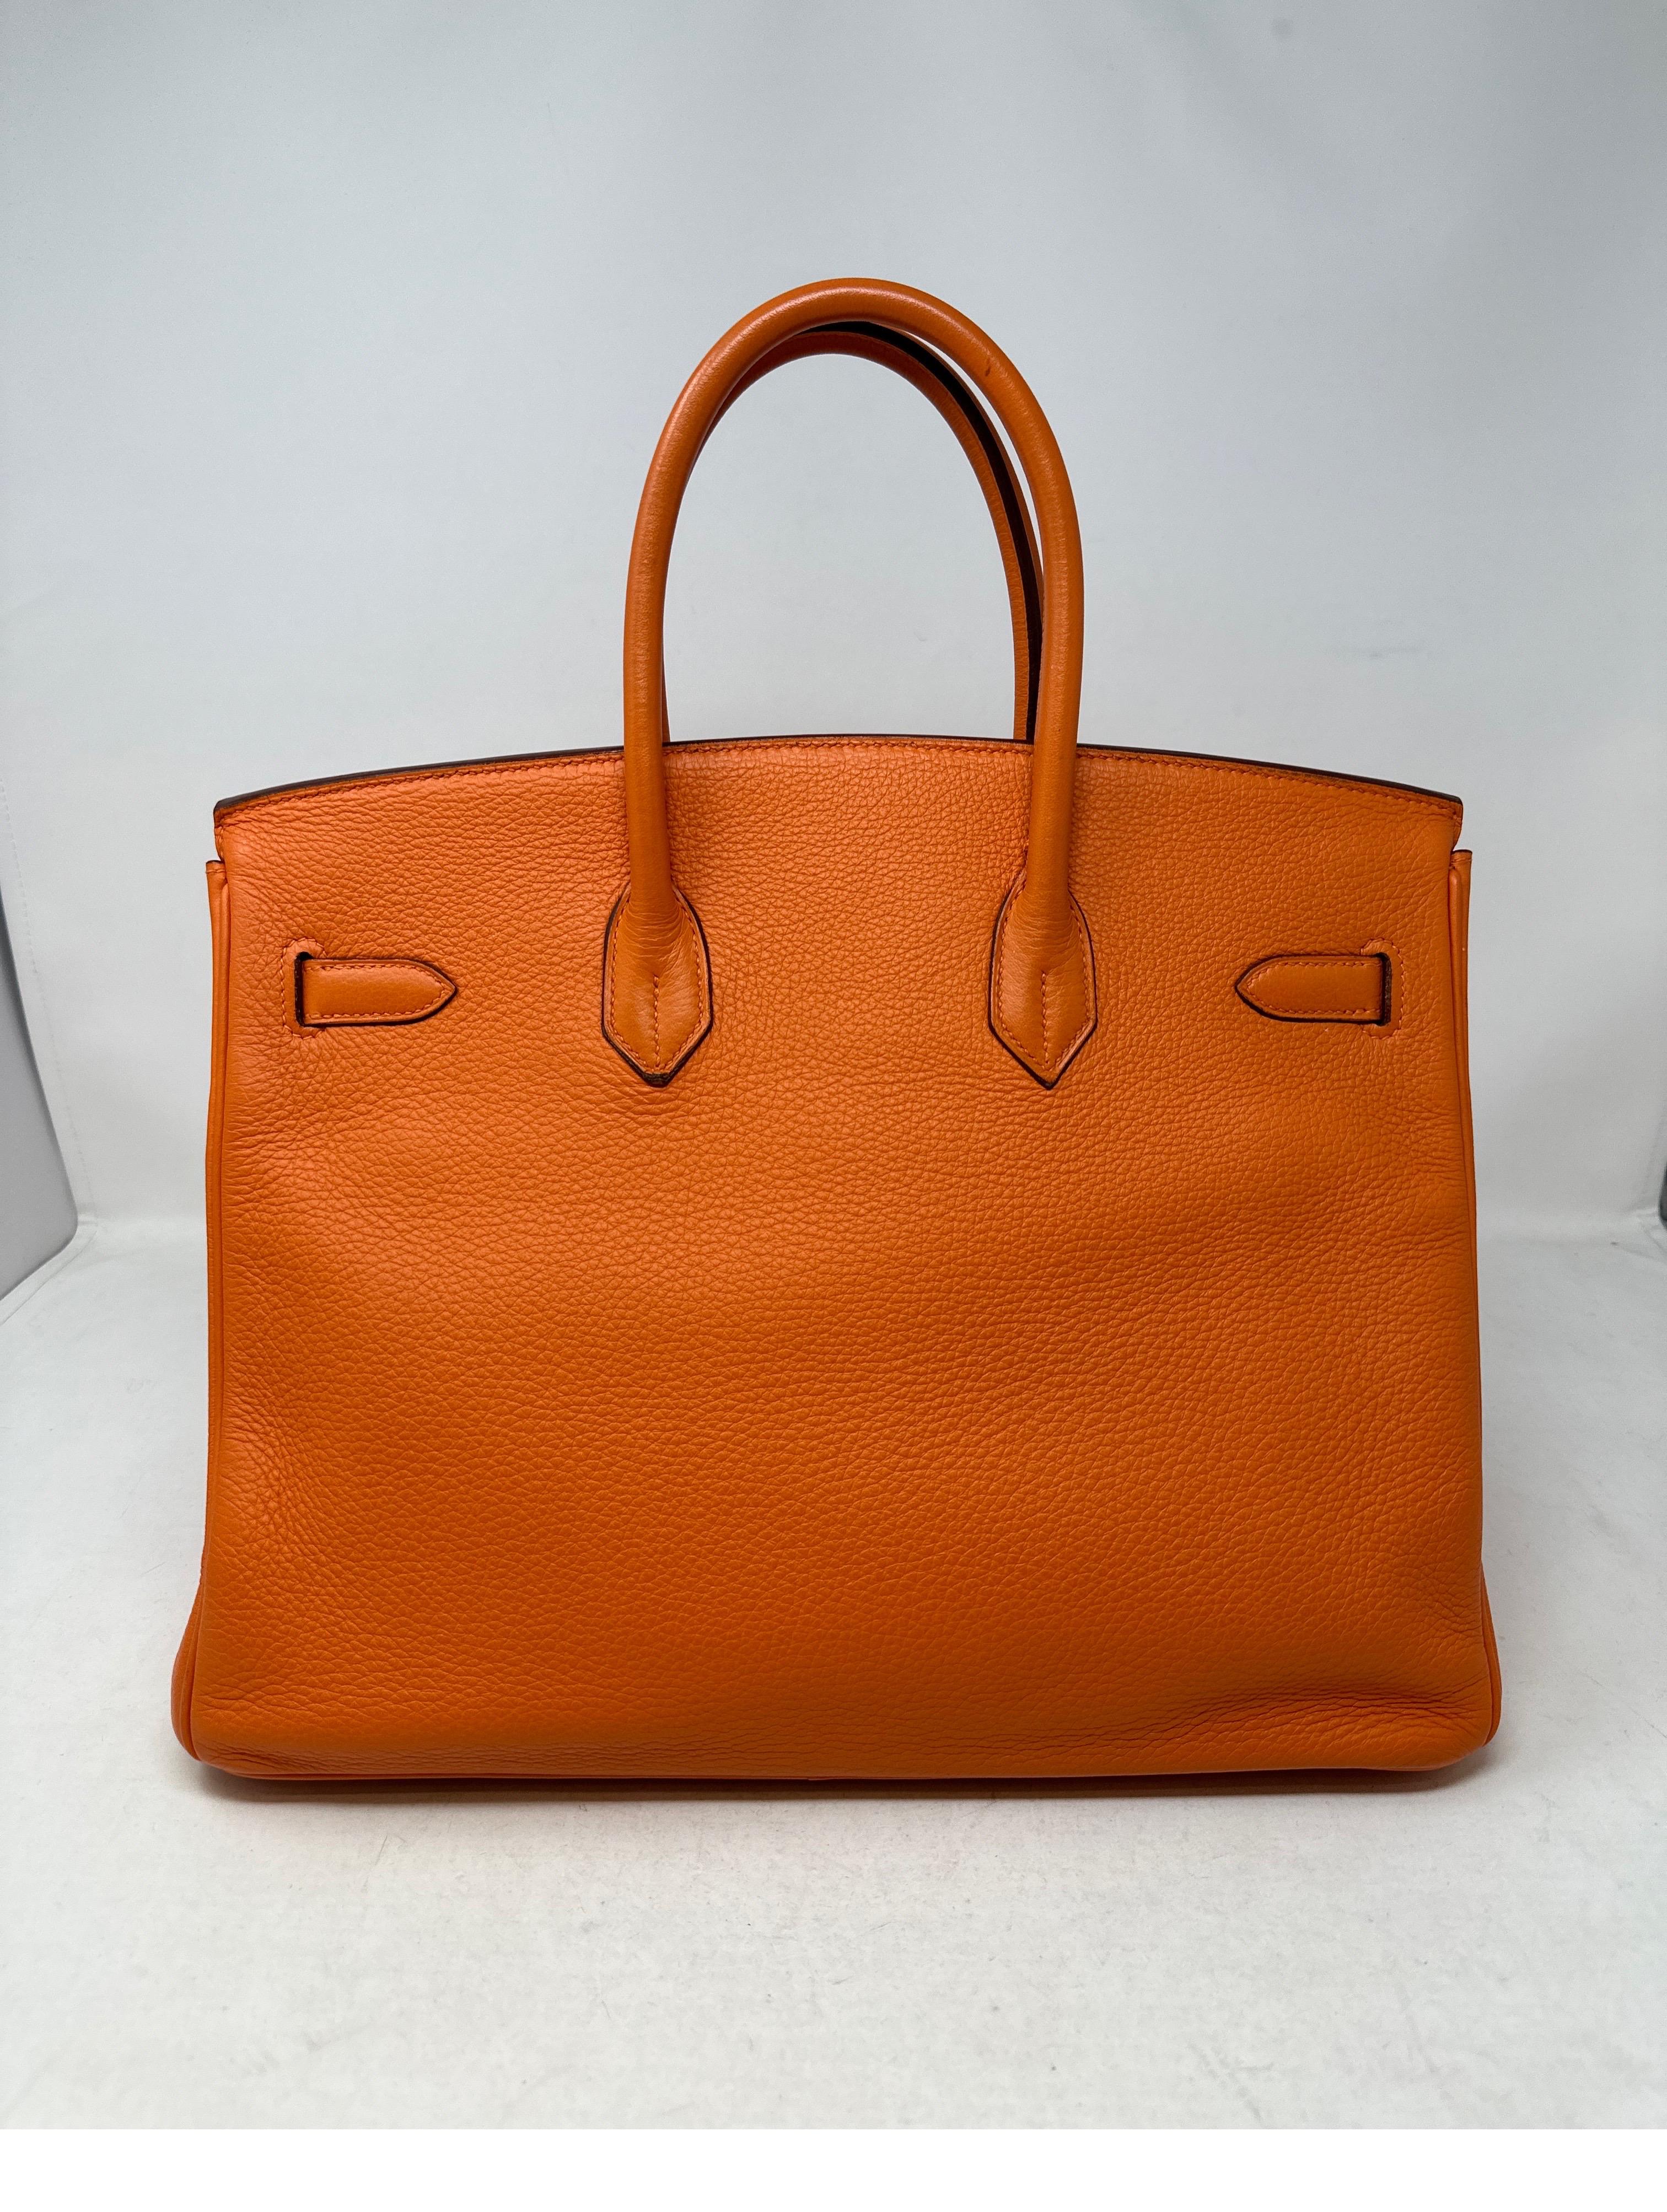 Hermès - Sac Birkin 35 orange  2